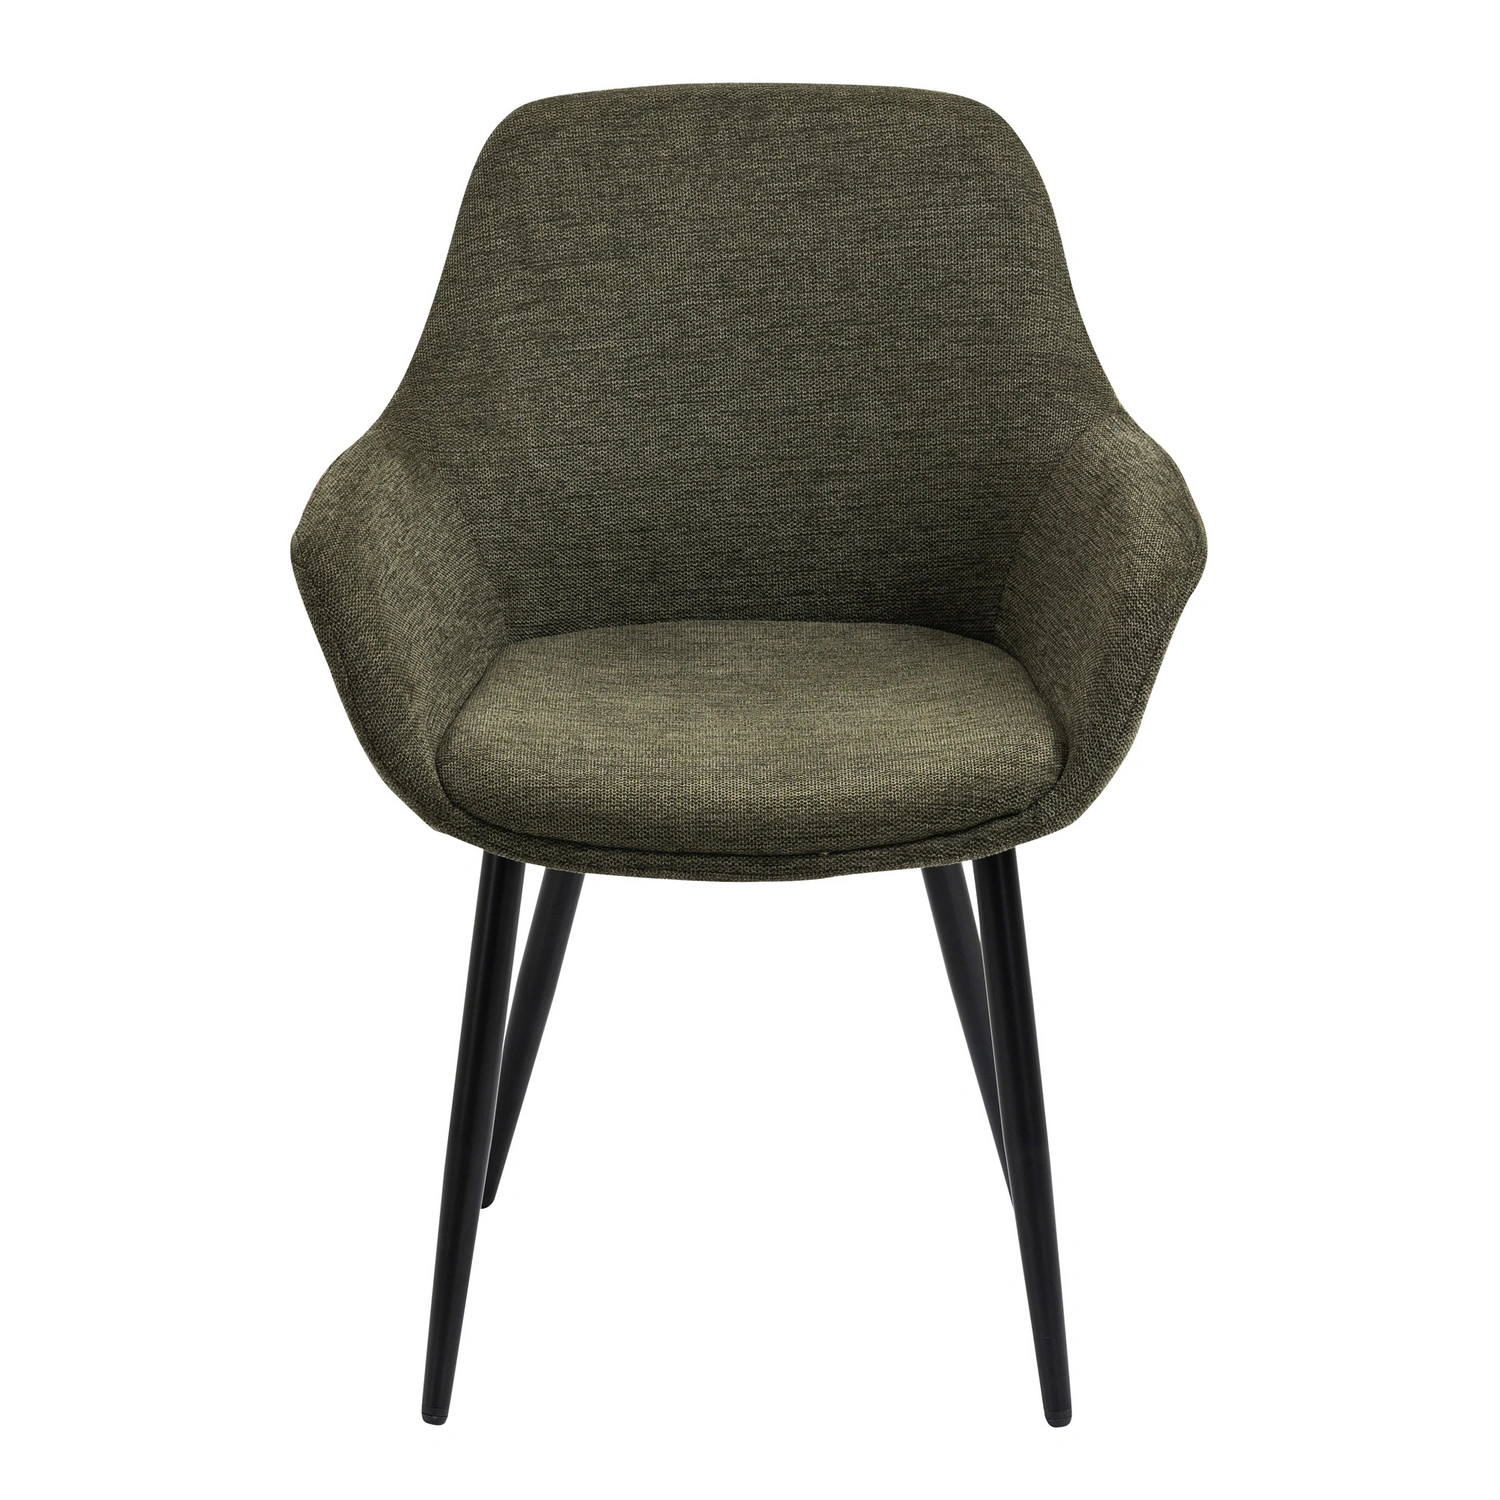 SalesFever Stuhl, 2 stk Höhe: cm, grün/schwarz, 86